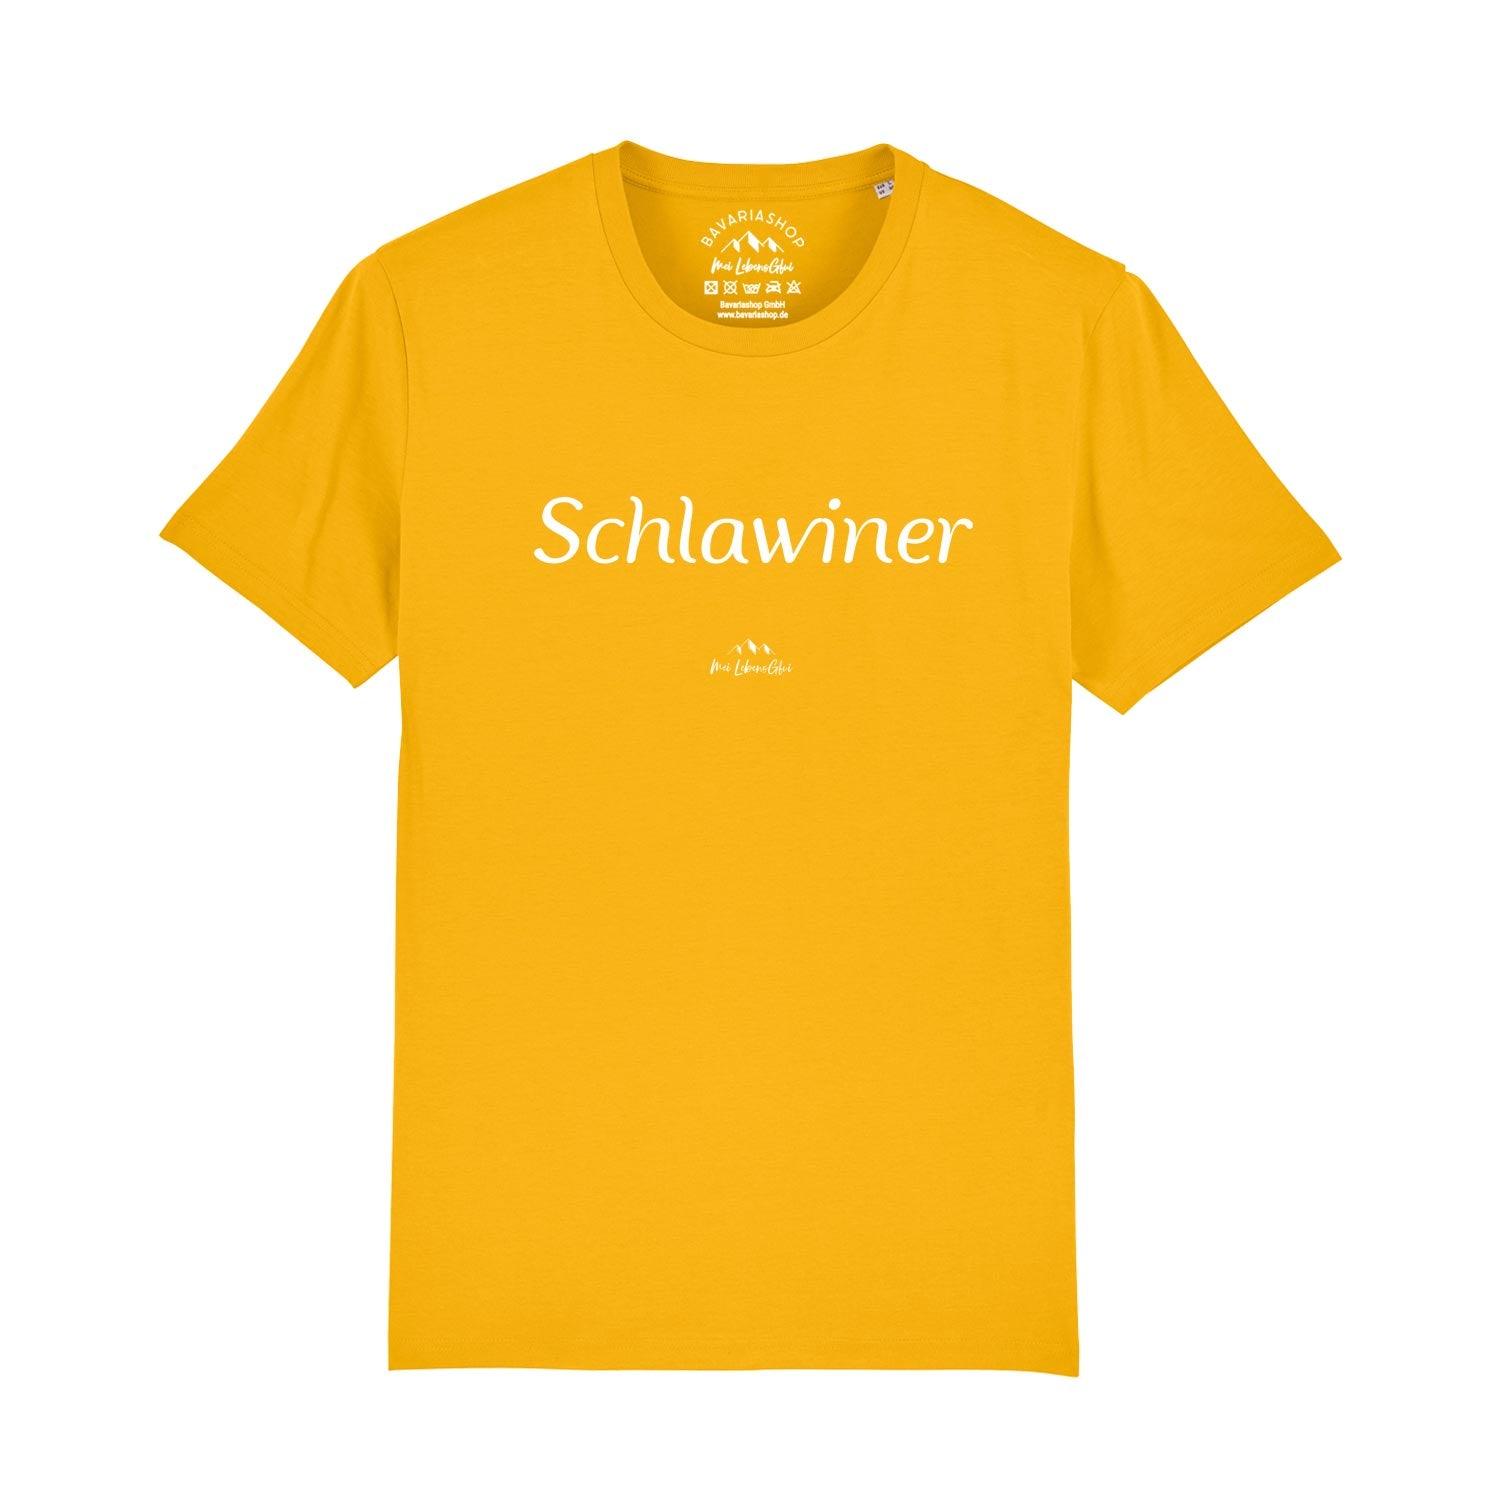 Herren T-Shirt "Schlawiner" - bavariashop - mei LebensGfui